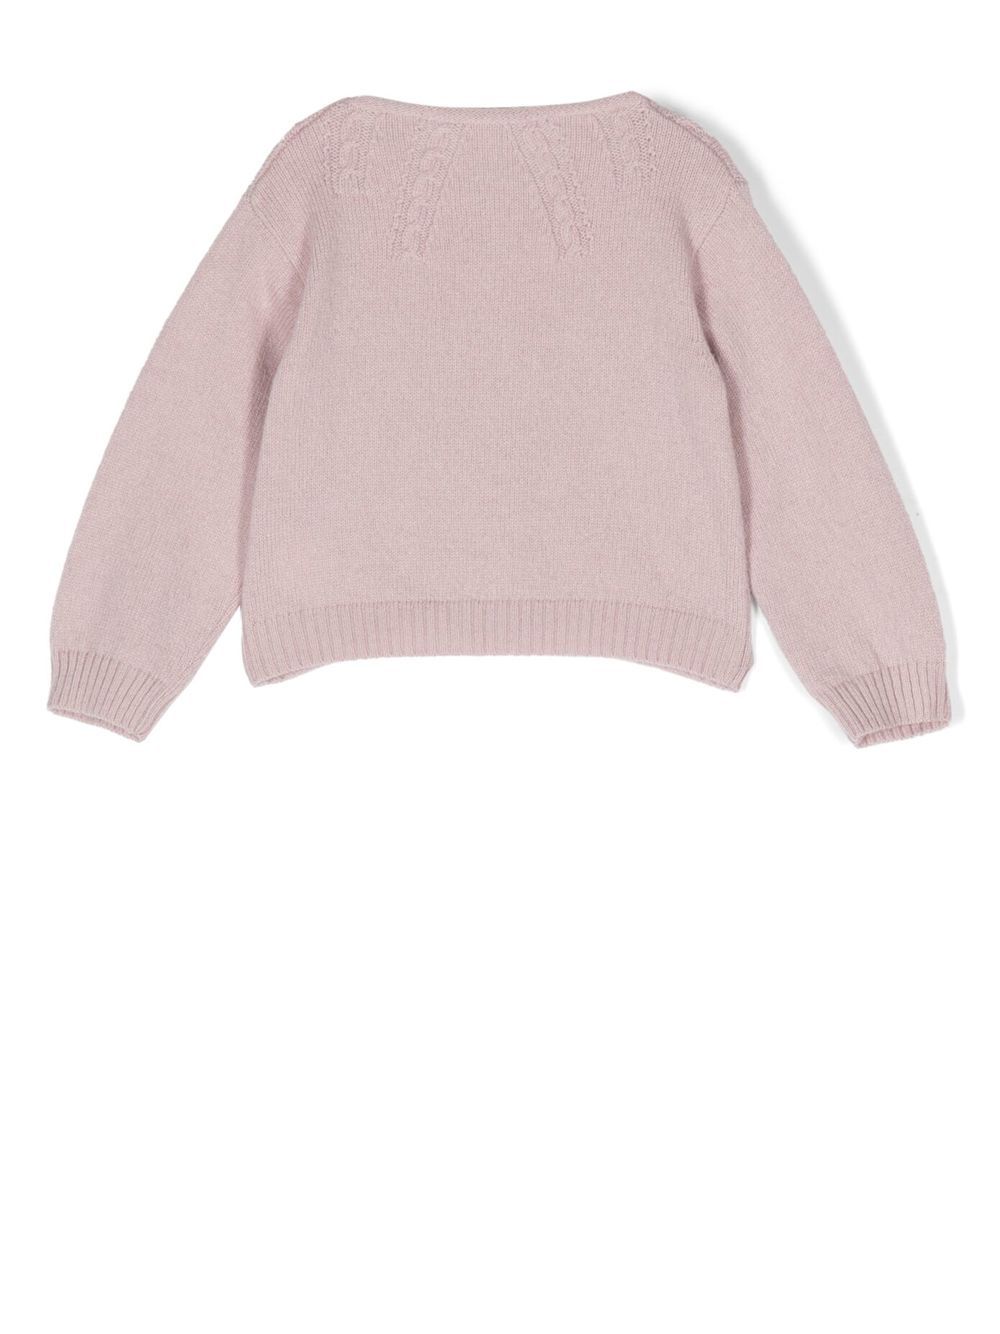 mariella ferrari fine-knit buttoned cardigan - pink